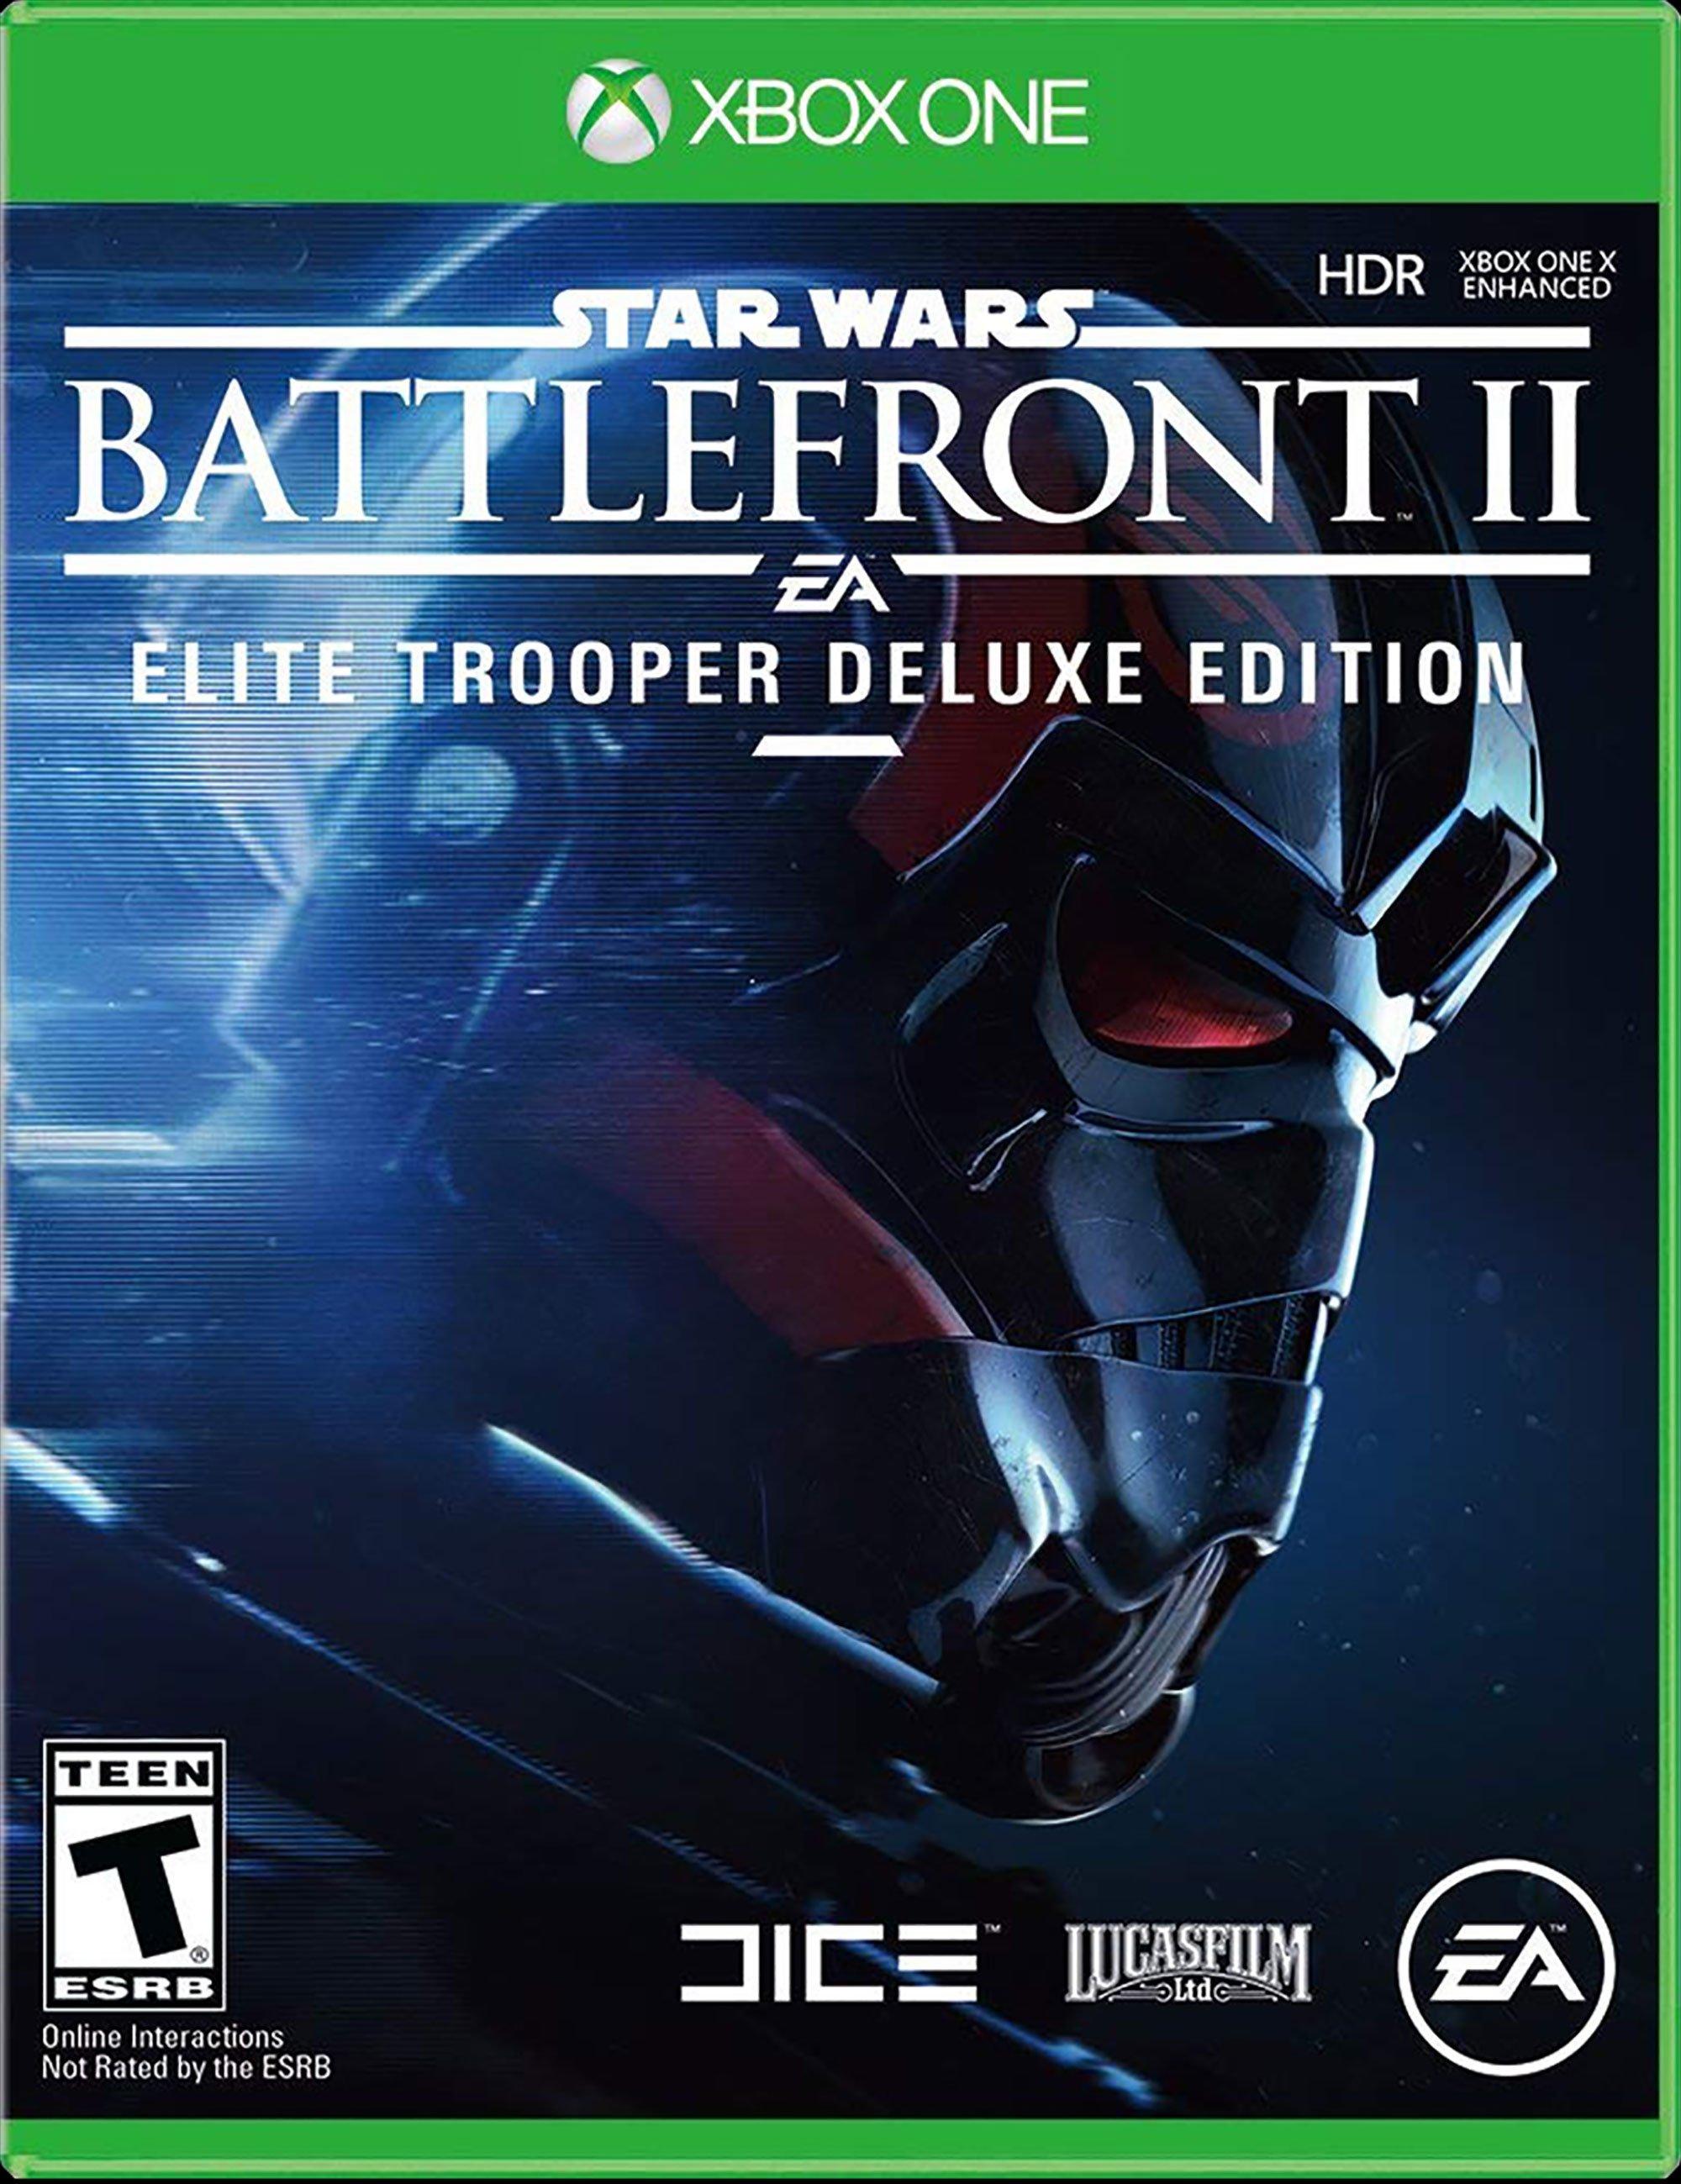 Star Wars Battlefront II Deluxe Edition Upgrade